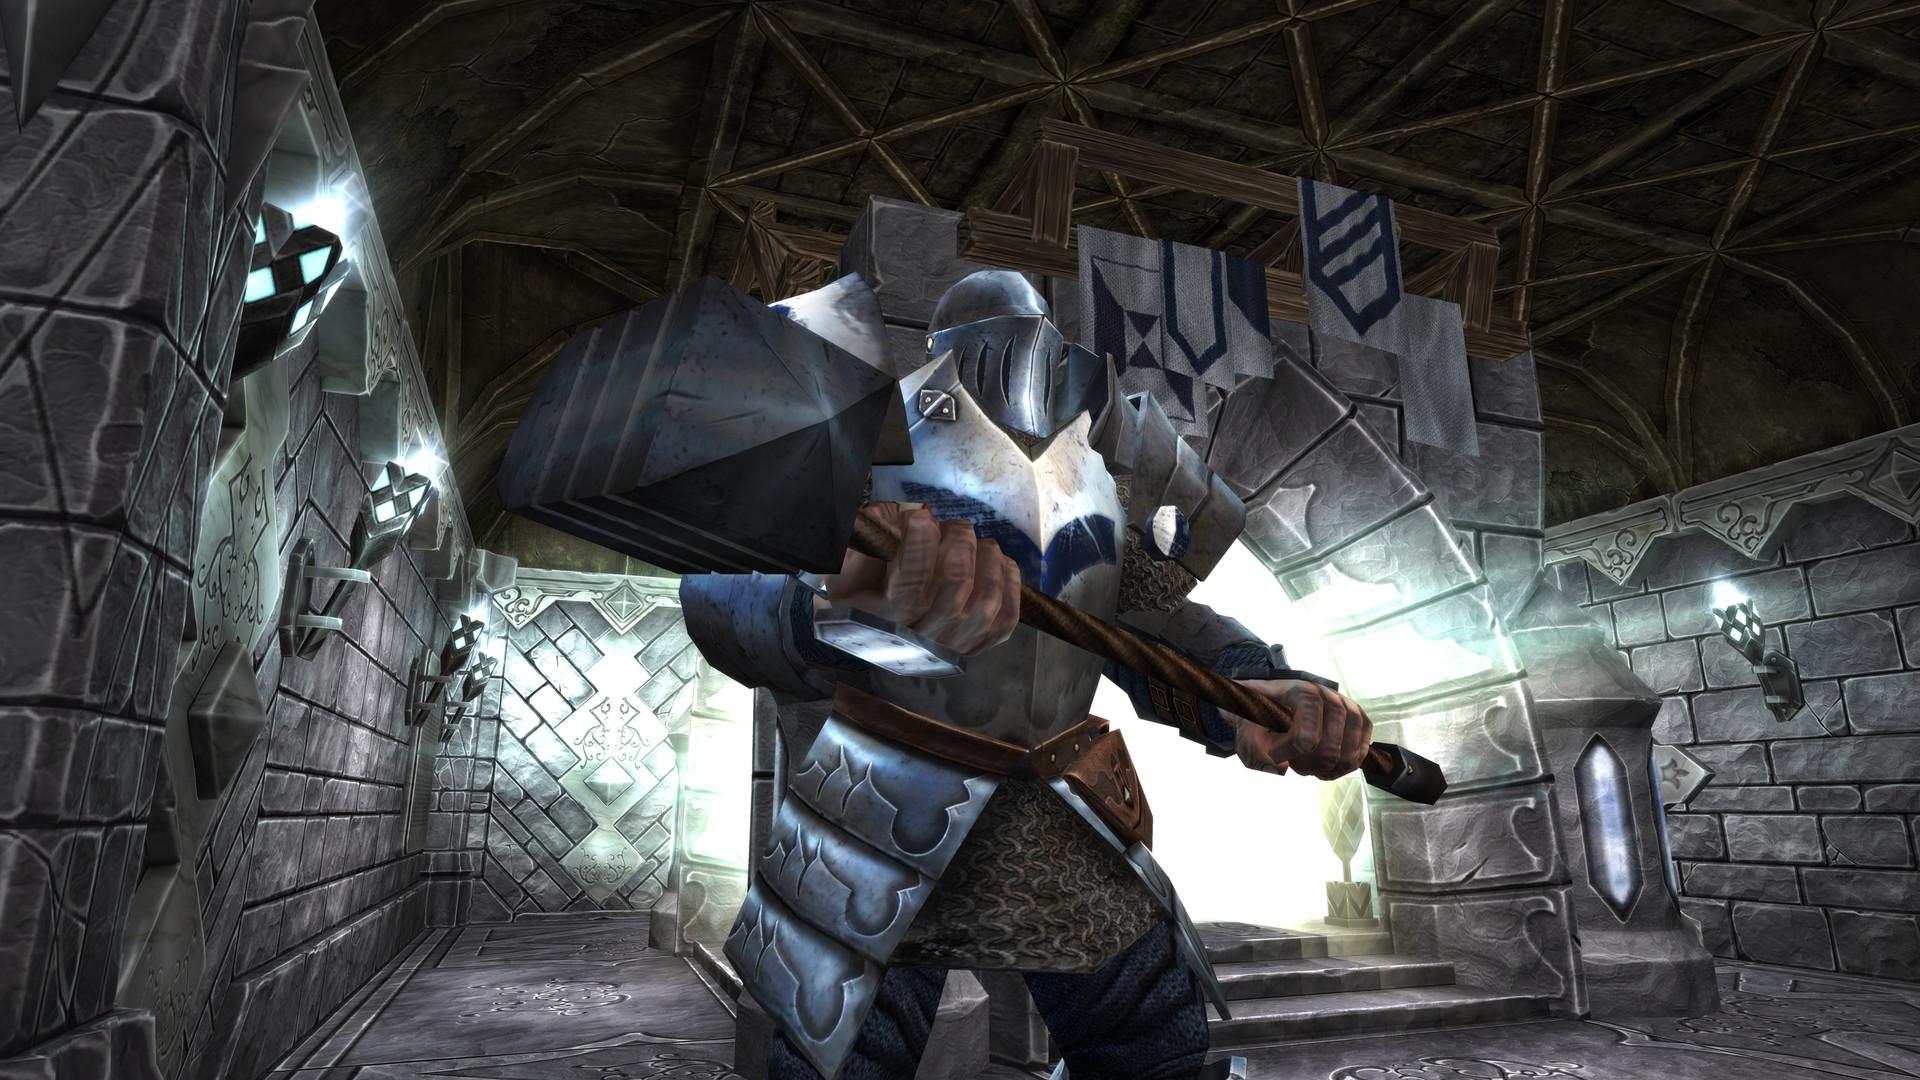 Screenshot №12 from game War for the Overworld